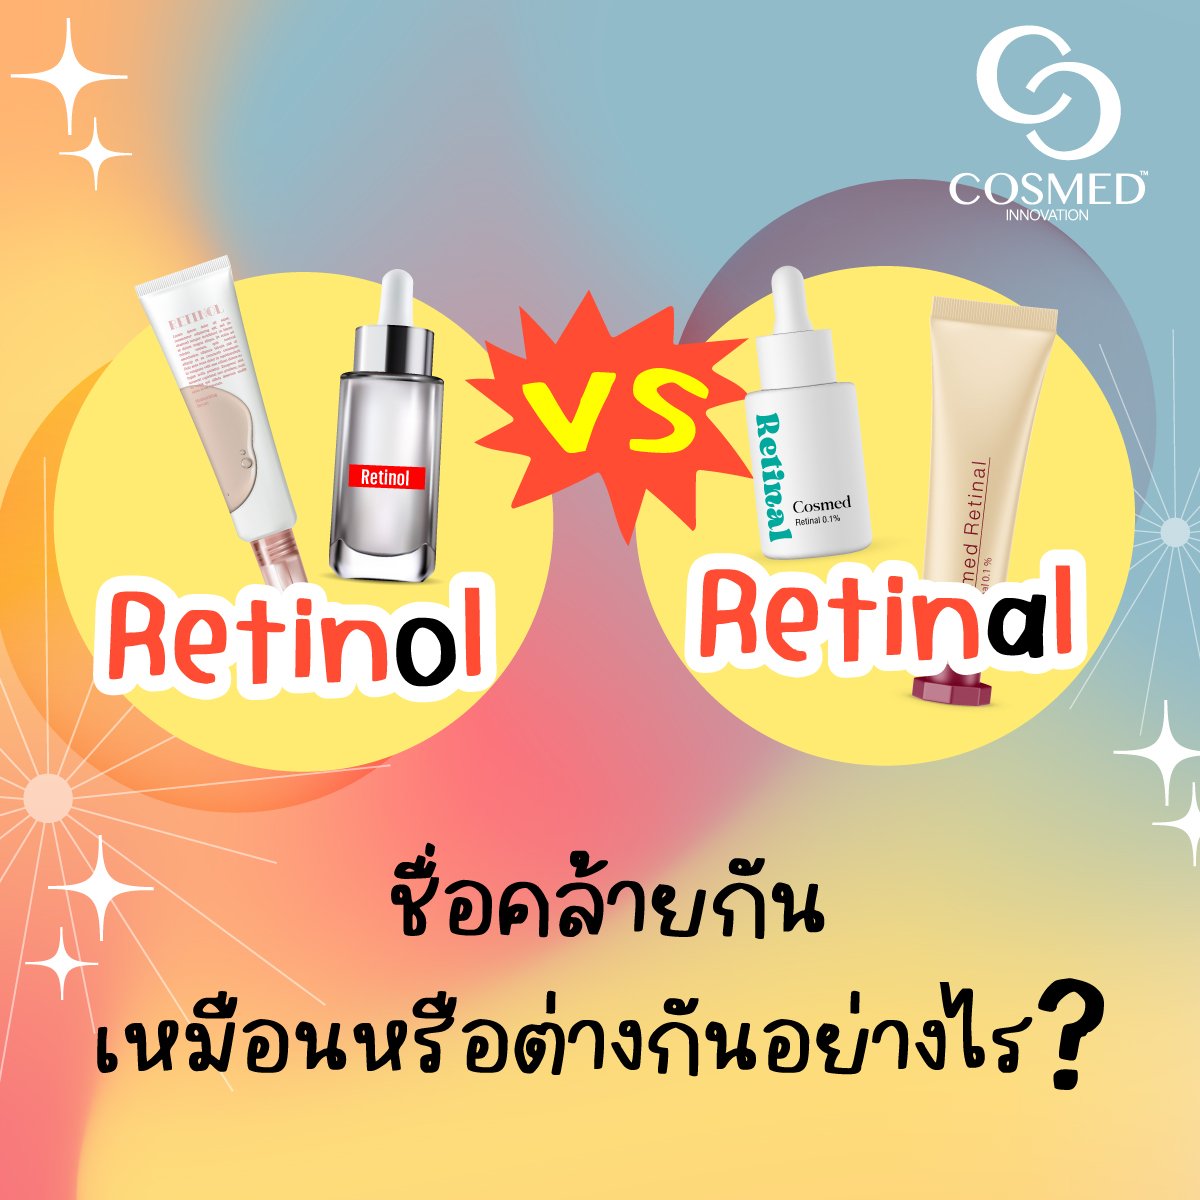 Retinol VS Retinal มีความเหมือนที่แตกต่างอย่างไร?